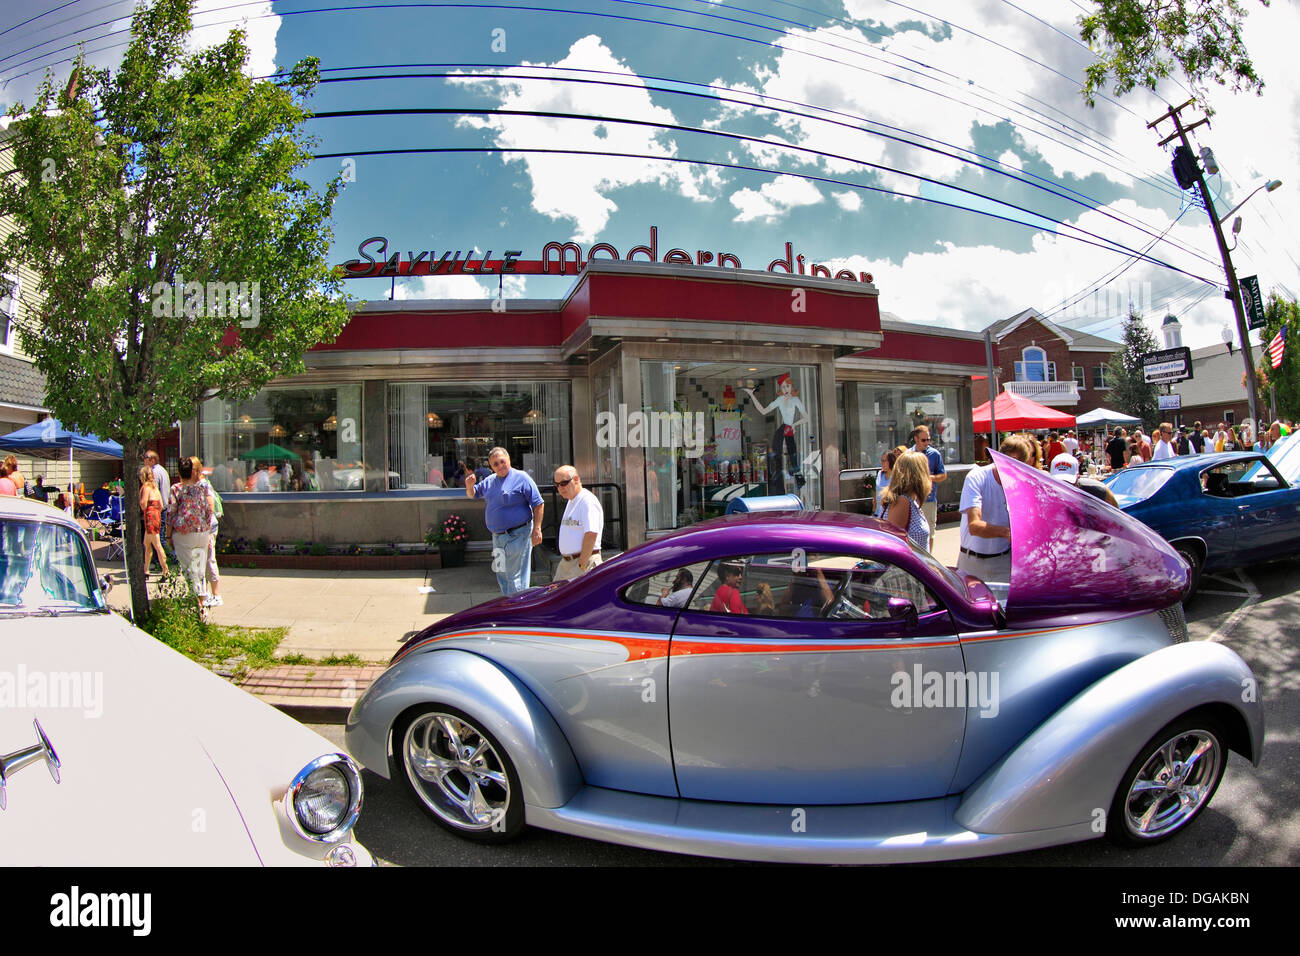 Classic car on display at street festival Sayville Long Island New York Stock Photo